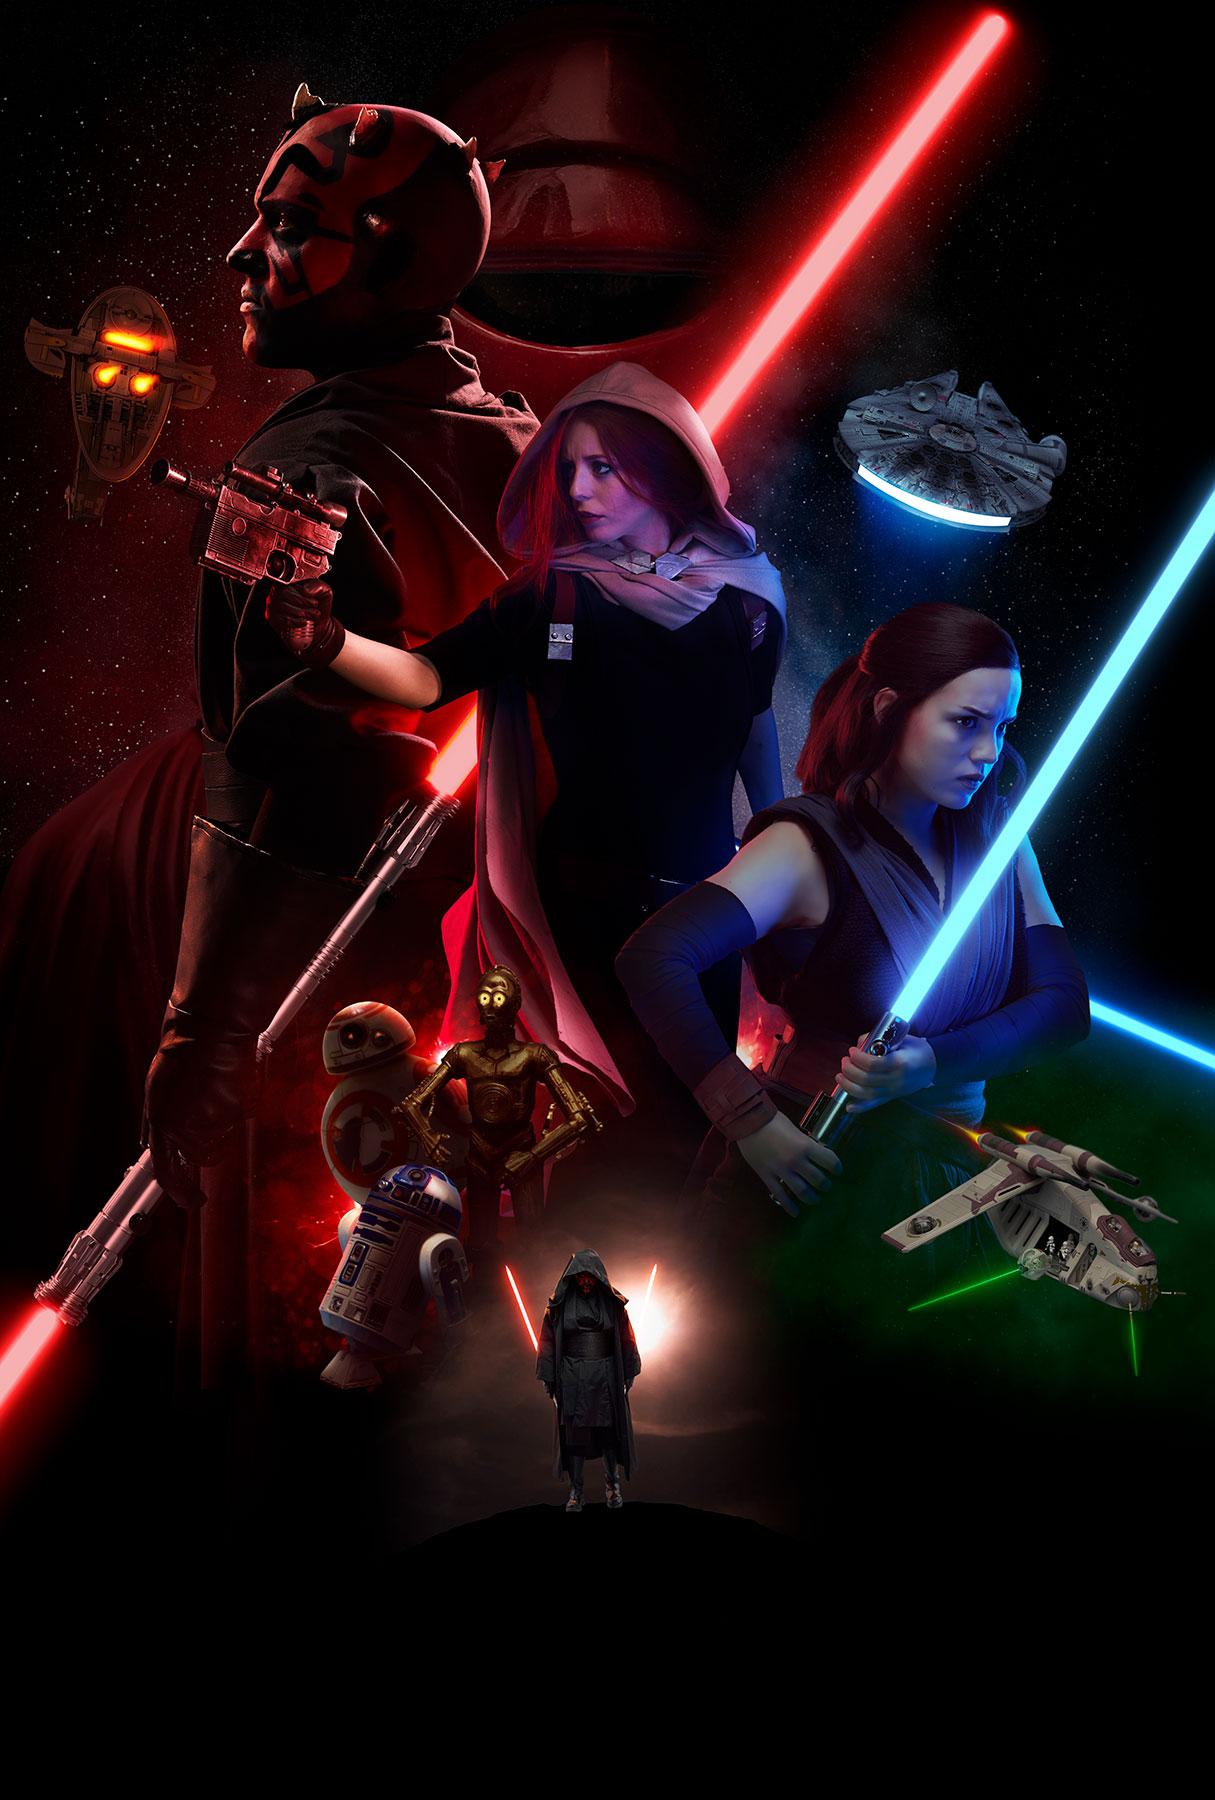 Sayanoff Arthur Star Wars Poster 02 12